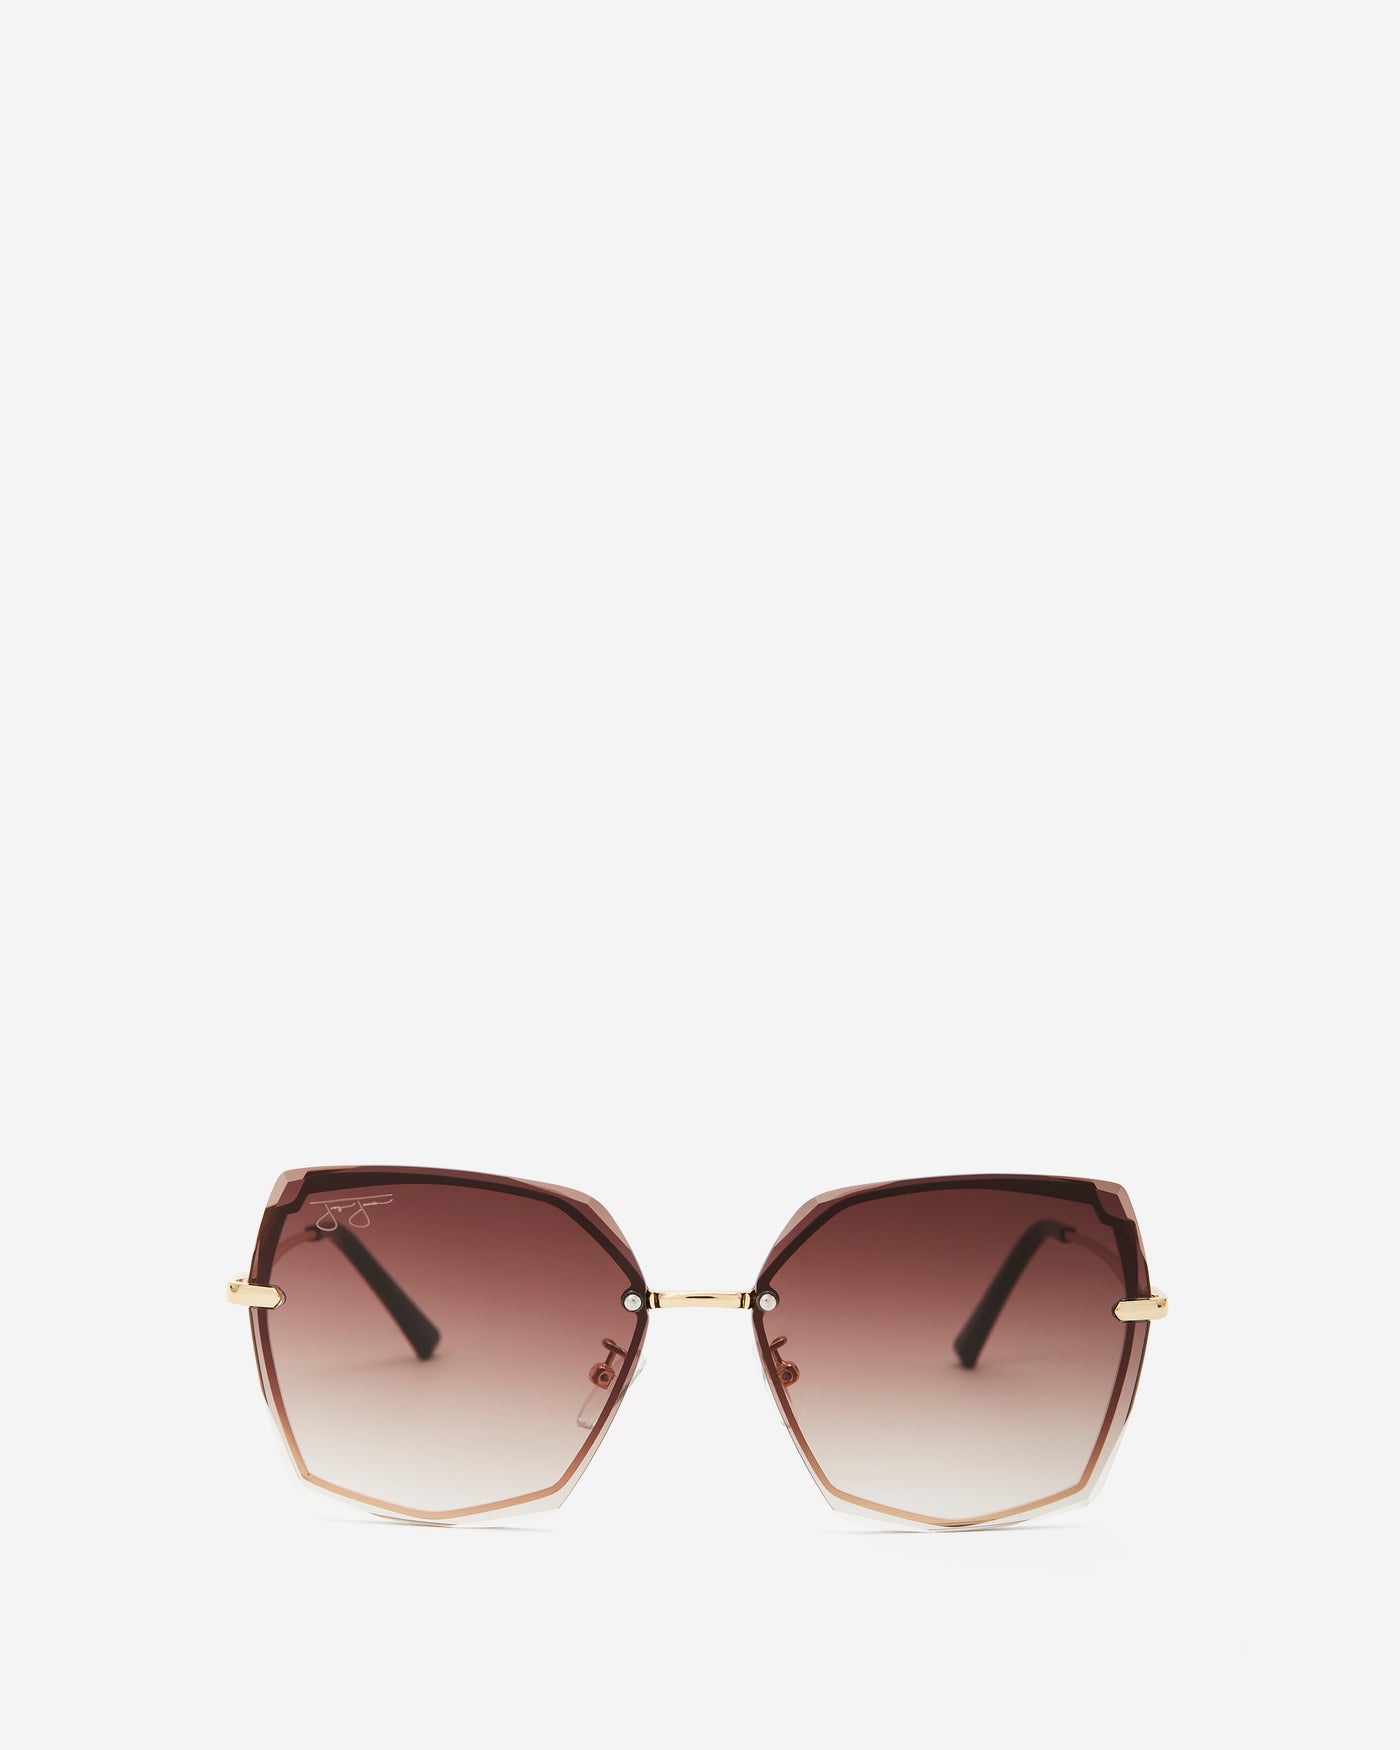 Hexagonal Metal Frame Sunglasses - Brown Frame with Brown Smoke Lens Sunglasses Joey James, The Label   